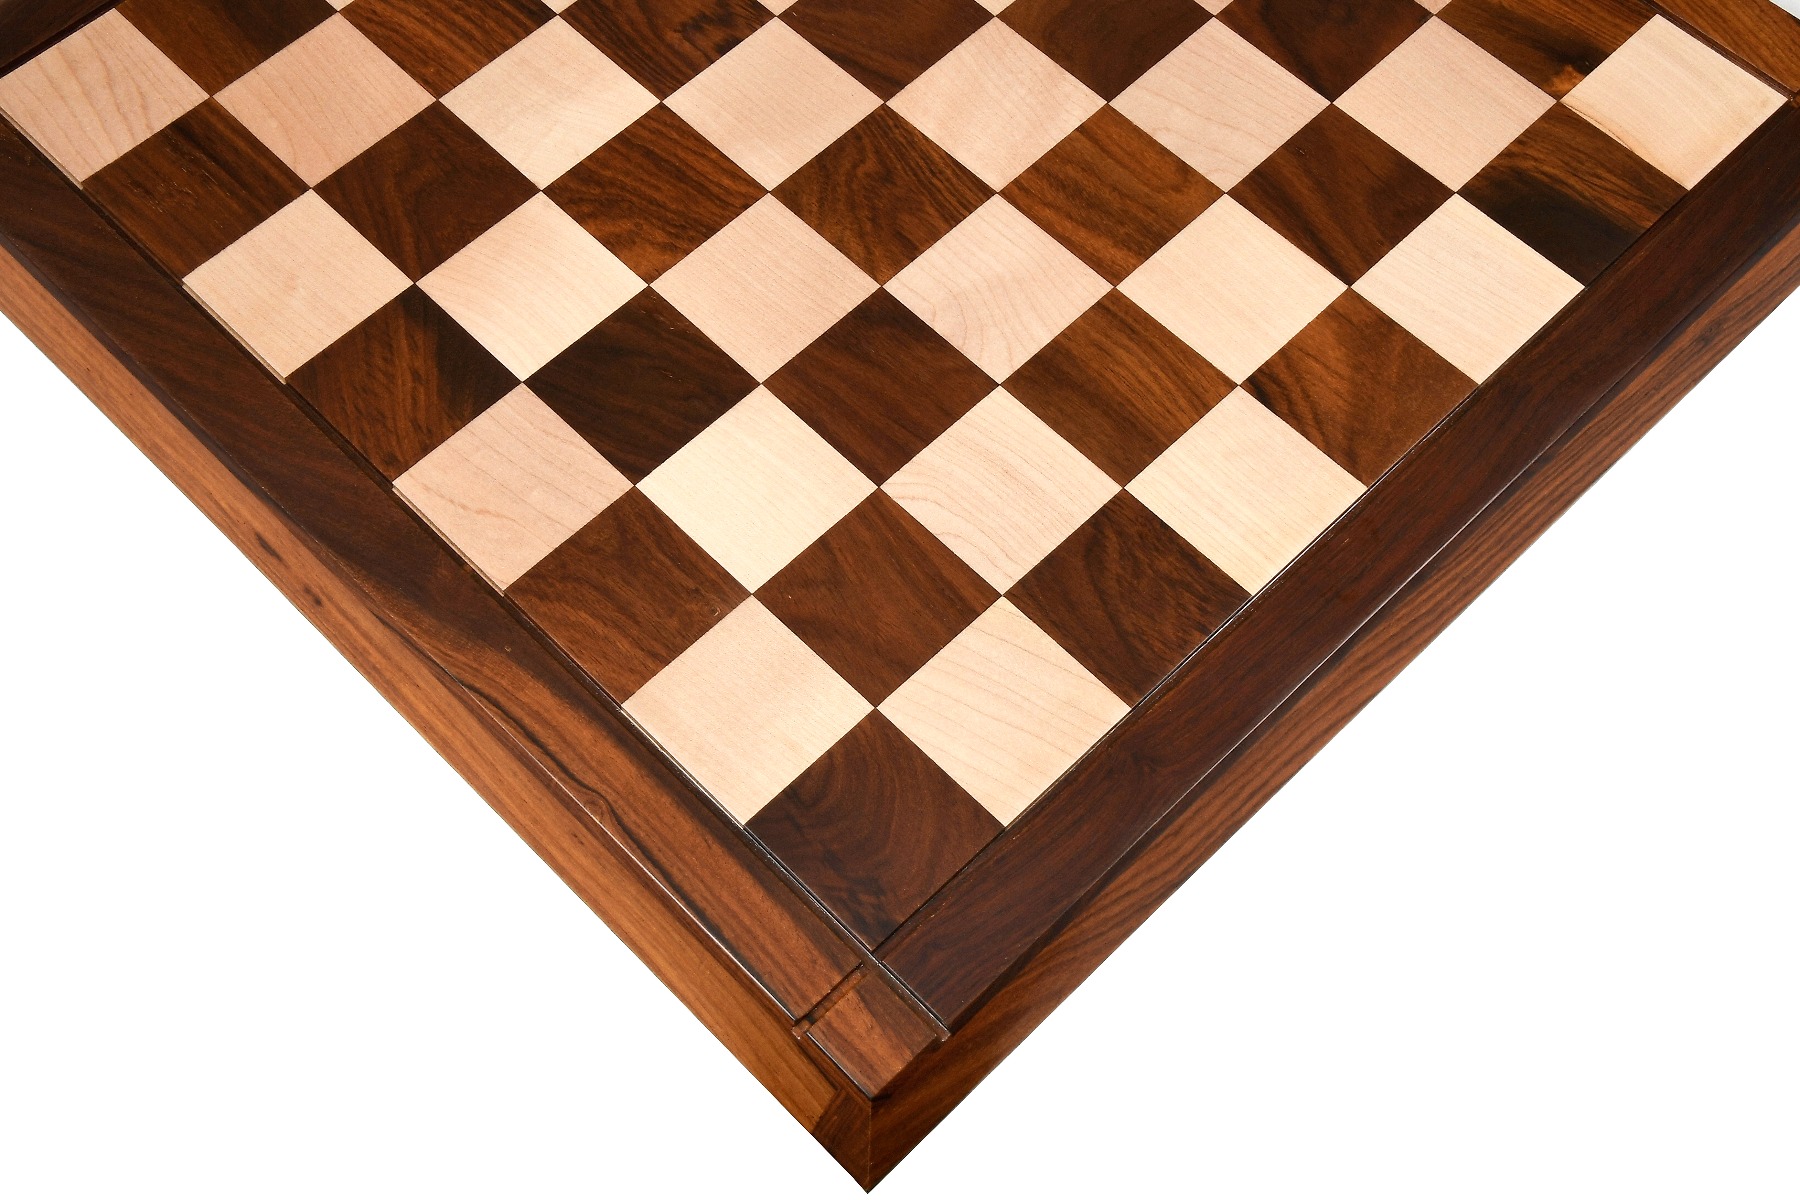 10" Wooden Magnetic Chess set Travel Sheesham wood Golden Rosewood